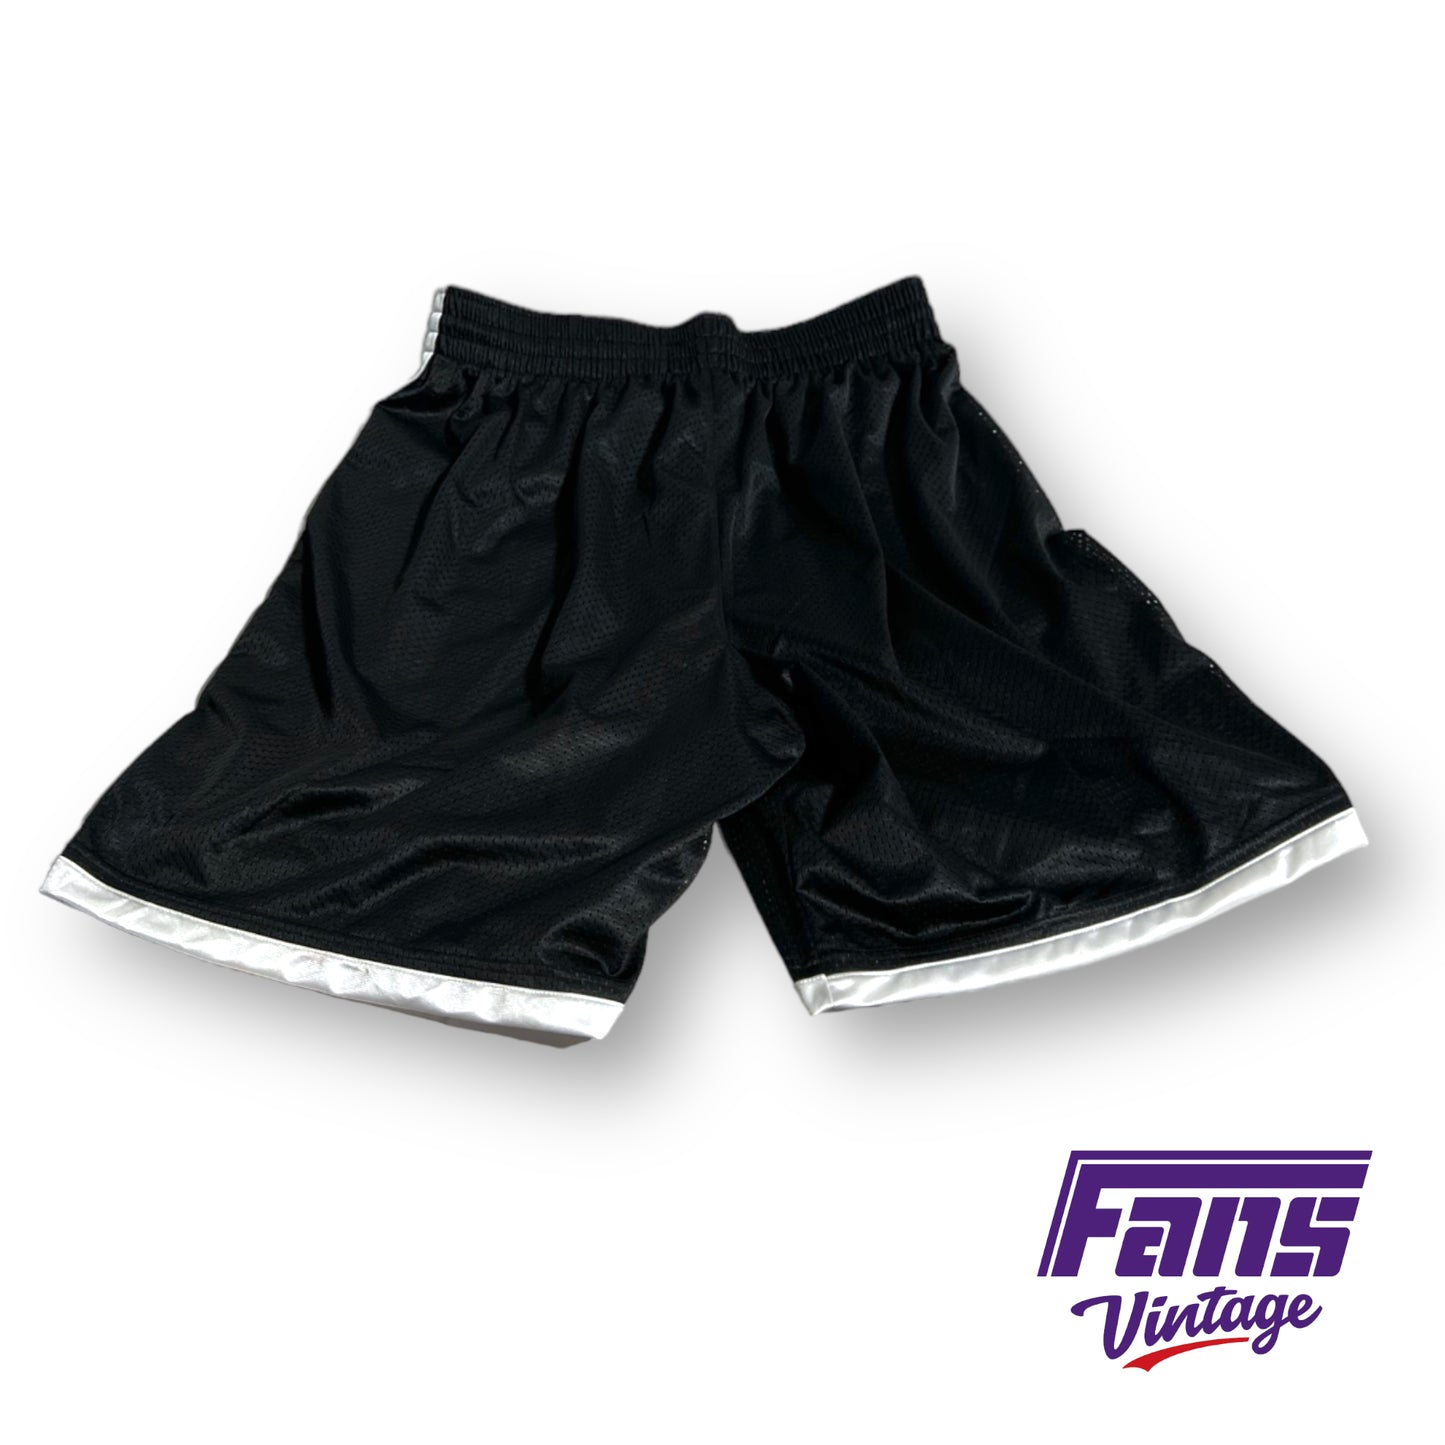 Nike TCU team issued Poinsettia Bowl shorts